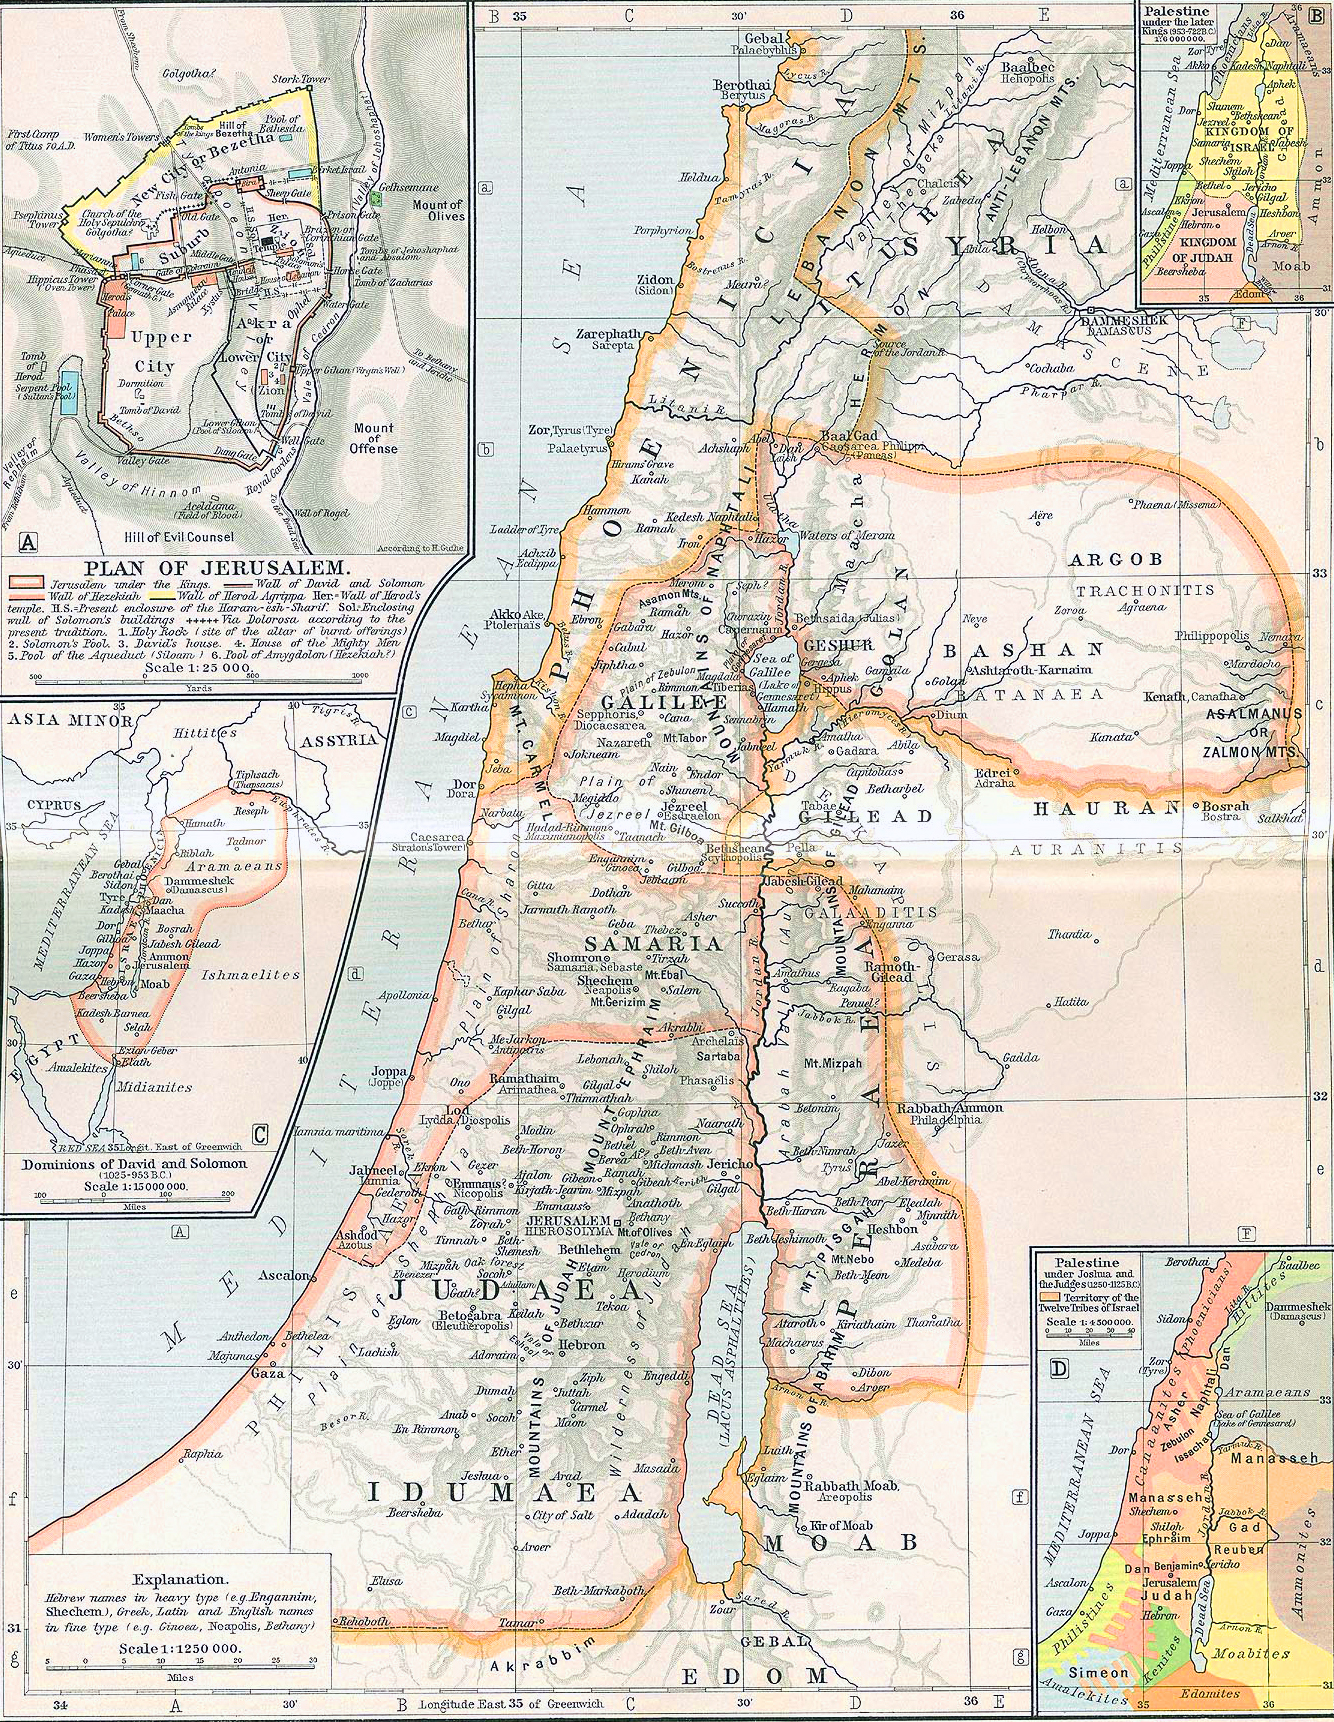 Ancient Palestine. Insets: Plan of Jerusalem. Dominions of David and Solomon (1025-953 B.C.). Palestine under the later Kings (953-722 B.C.). Palestine under Joshua and the Judges (1250-1125 B.C.)